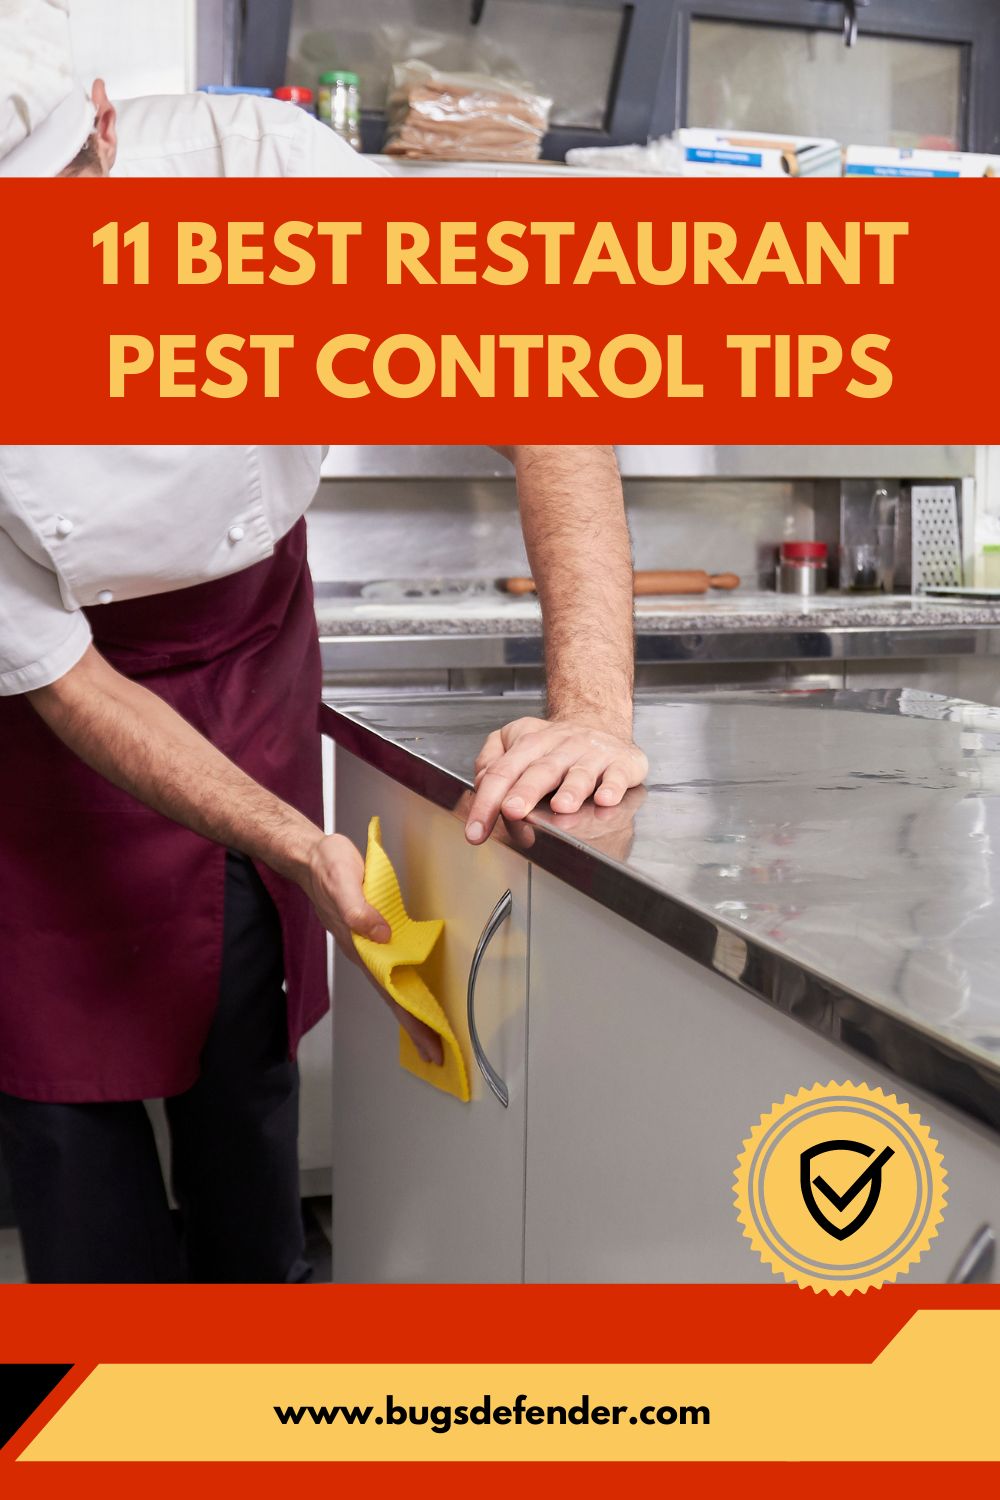 11 Best Restaurant Pest Control Tips pin1